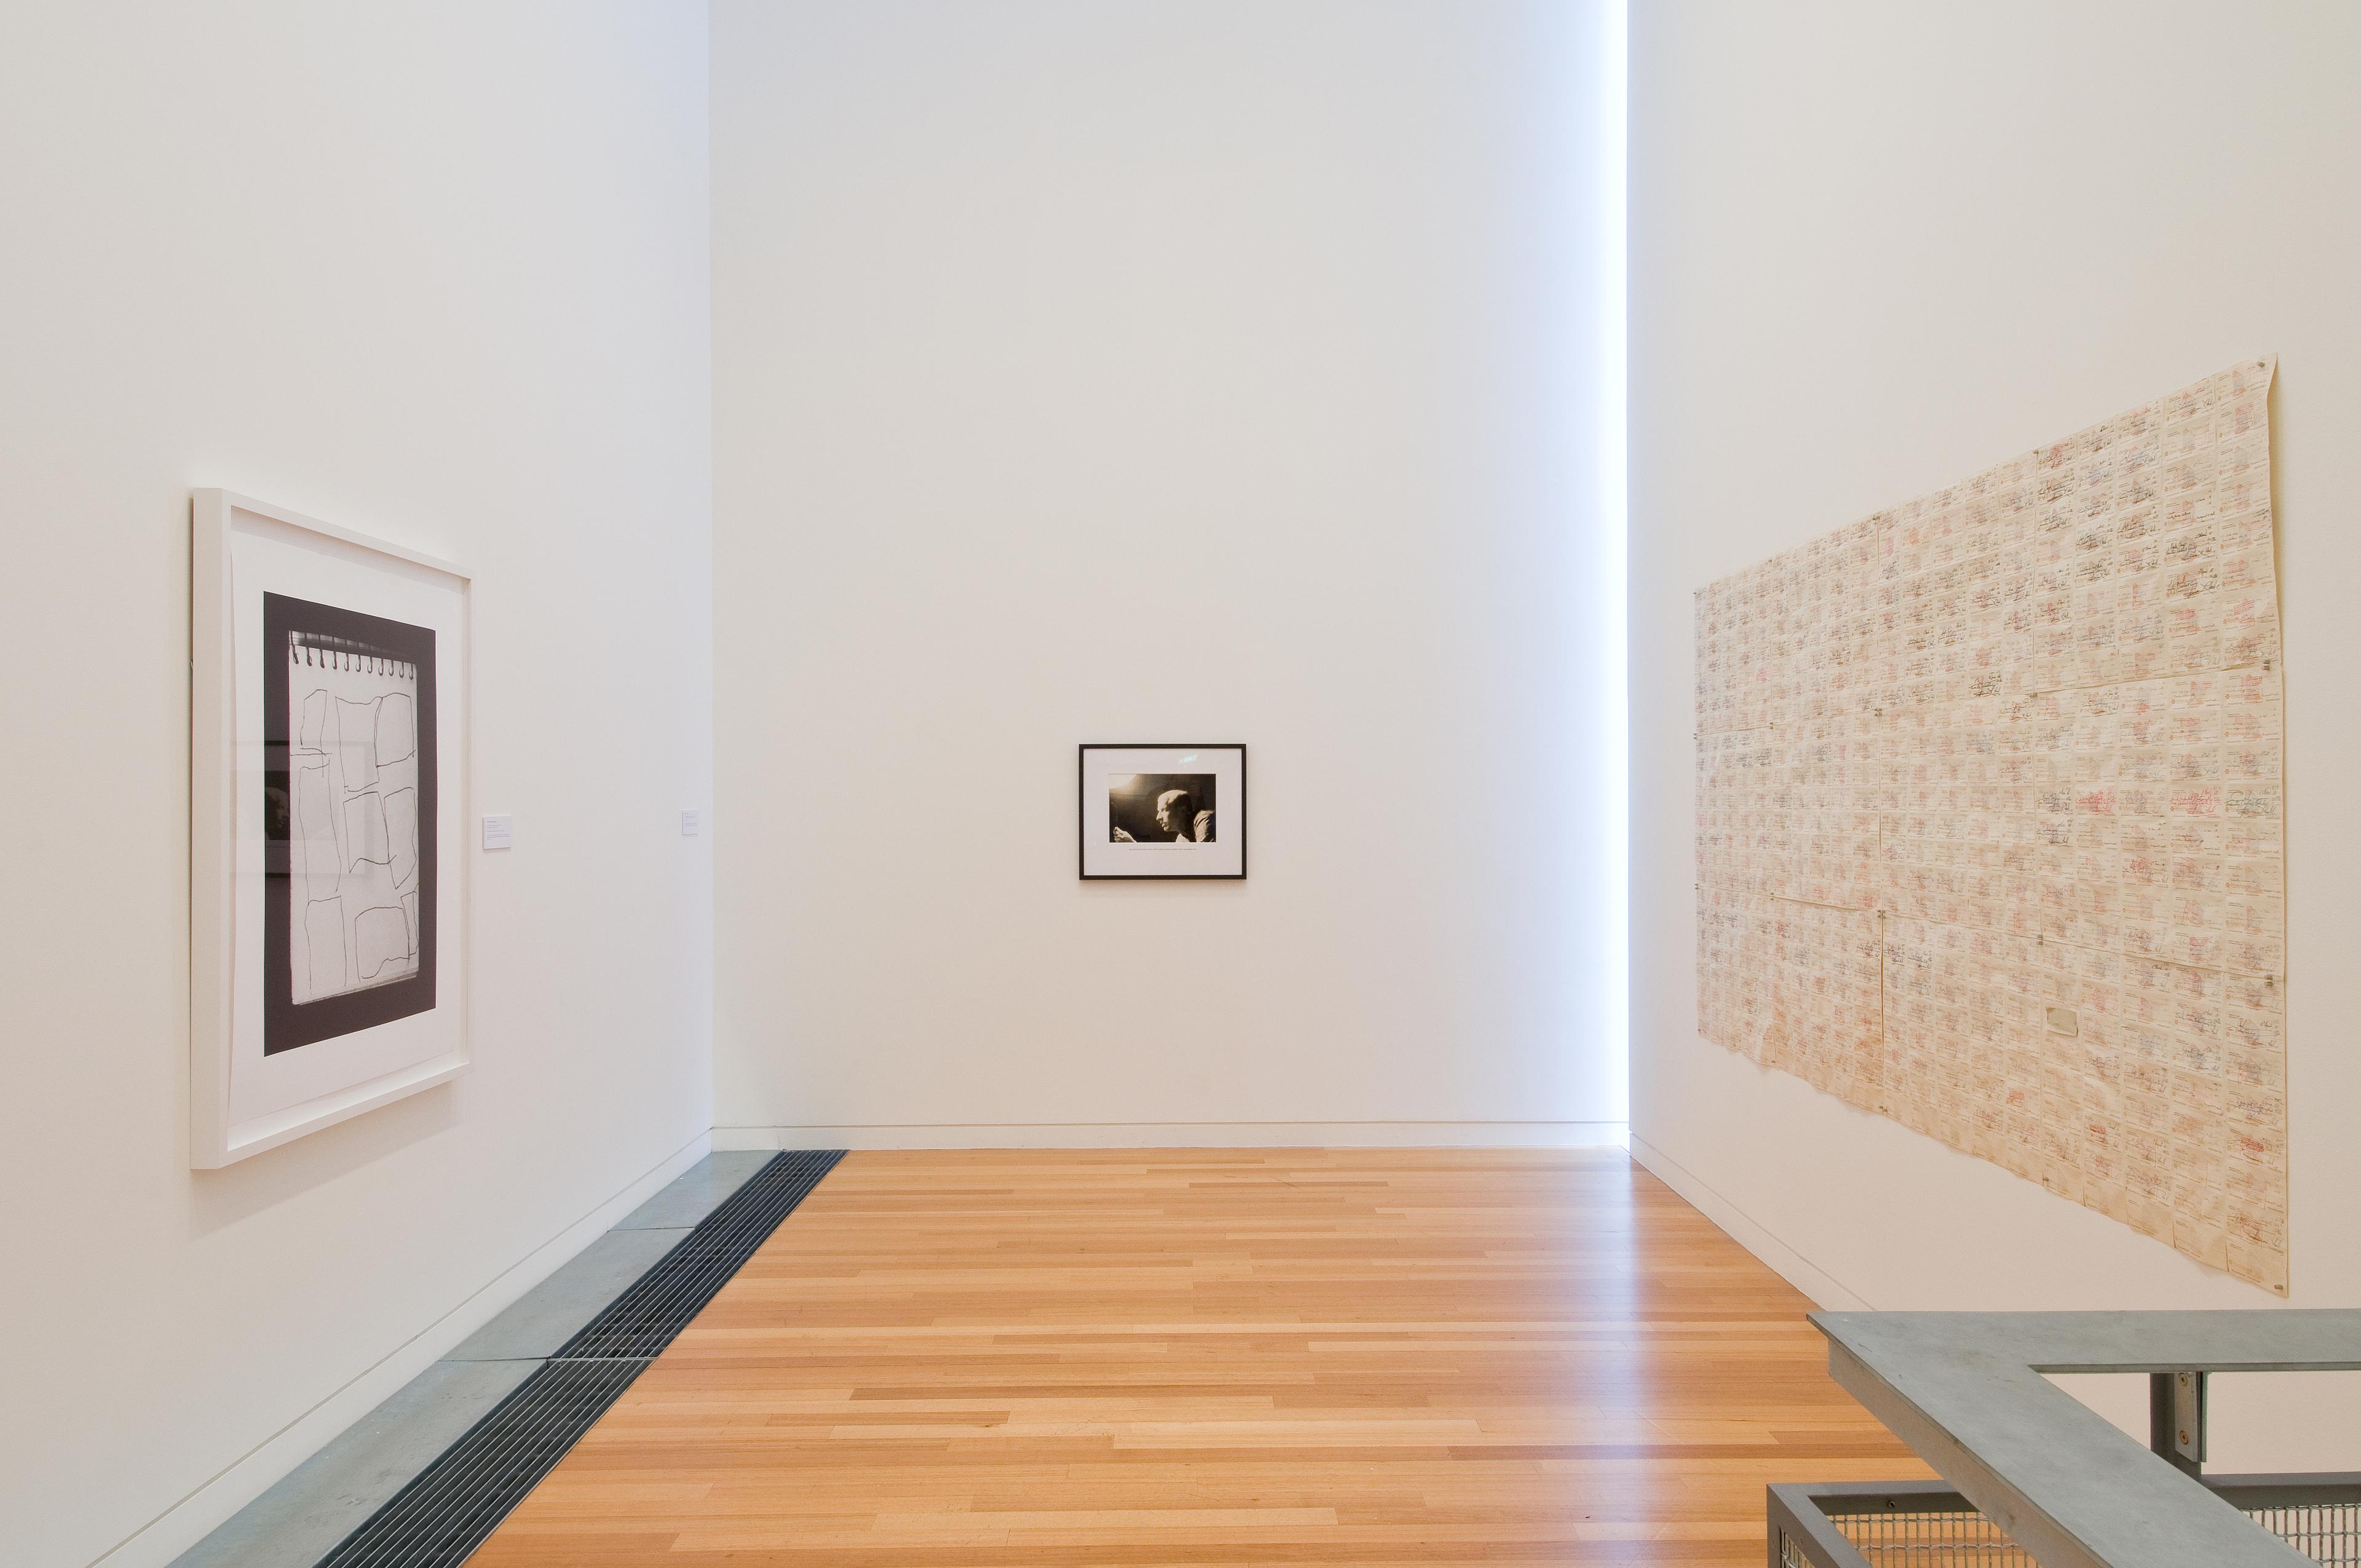 Installation view, Peripheral Relations: Marcel Duchamp and New Zealand Art 1960-2011, Adam Art Gallery Te Pātaka Toi, Victoria University of Wellington, 2012. Photo: Robert Cross